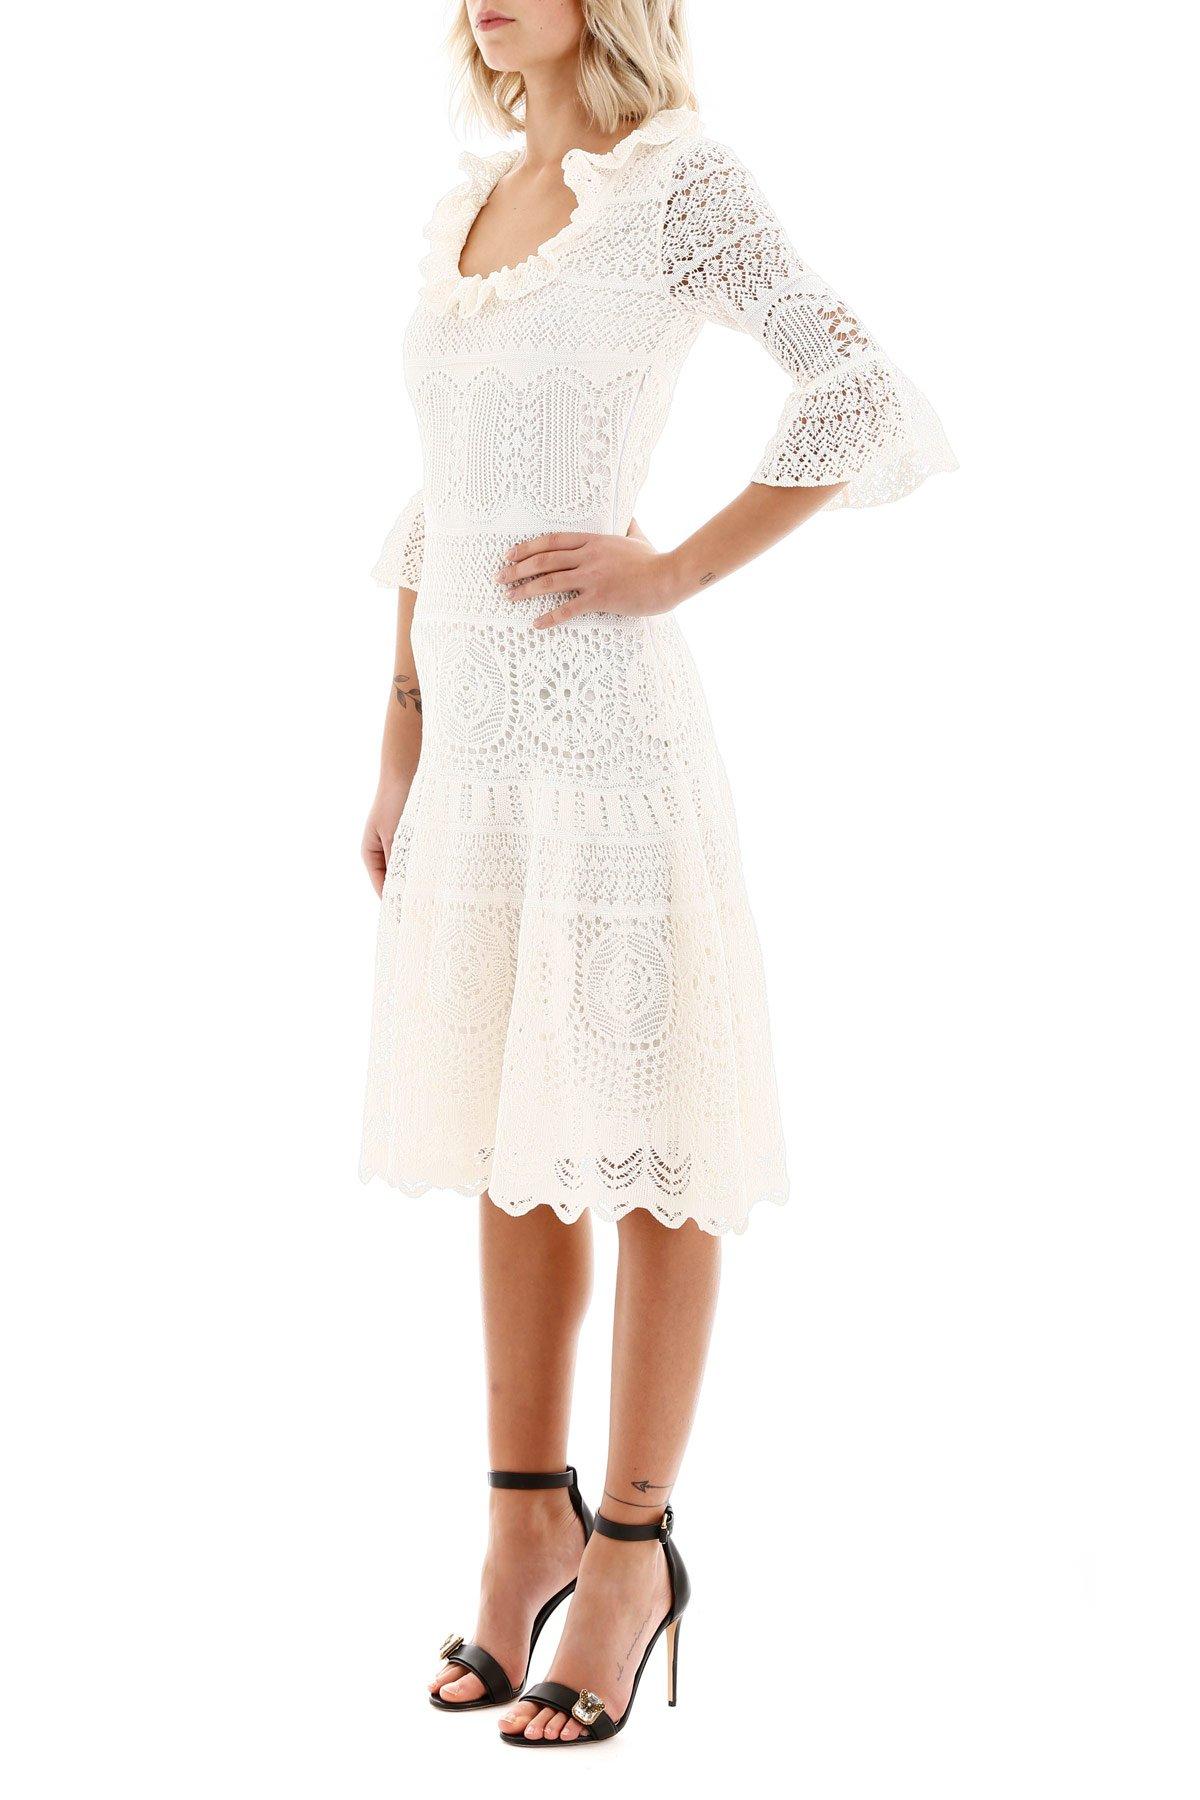 Alexander McQueen Lace Midi Dress in White - Lyst